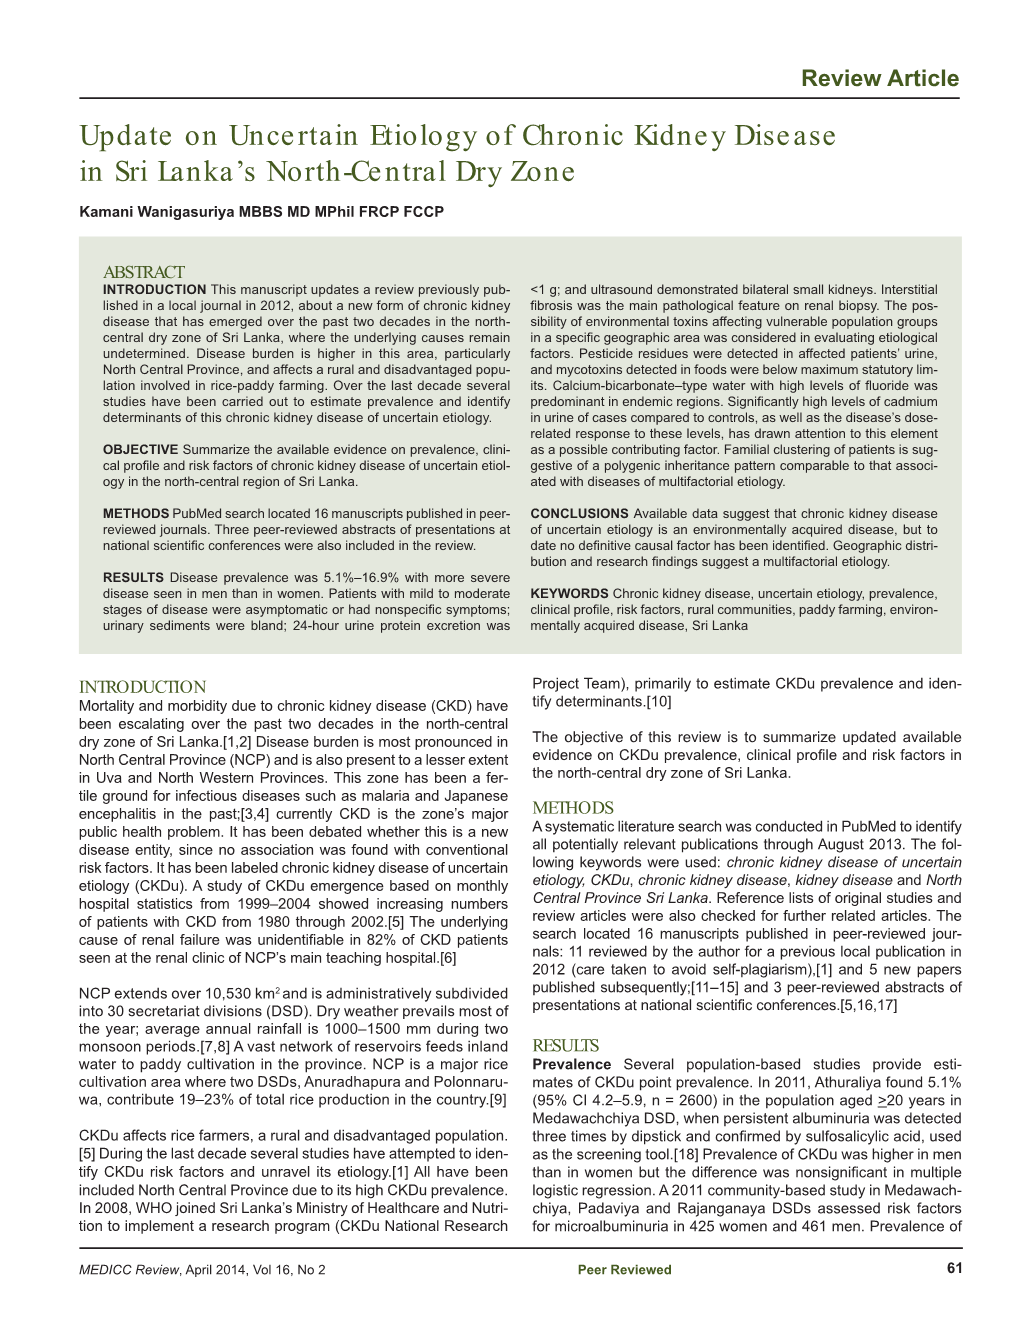 Update on Uncertain Etiology of Chronic Kidney Disease in Sri Lanka’S North-Central Dry Zone